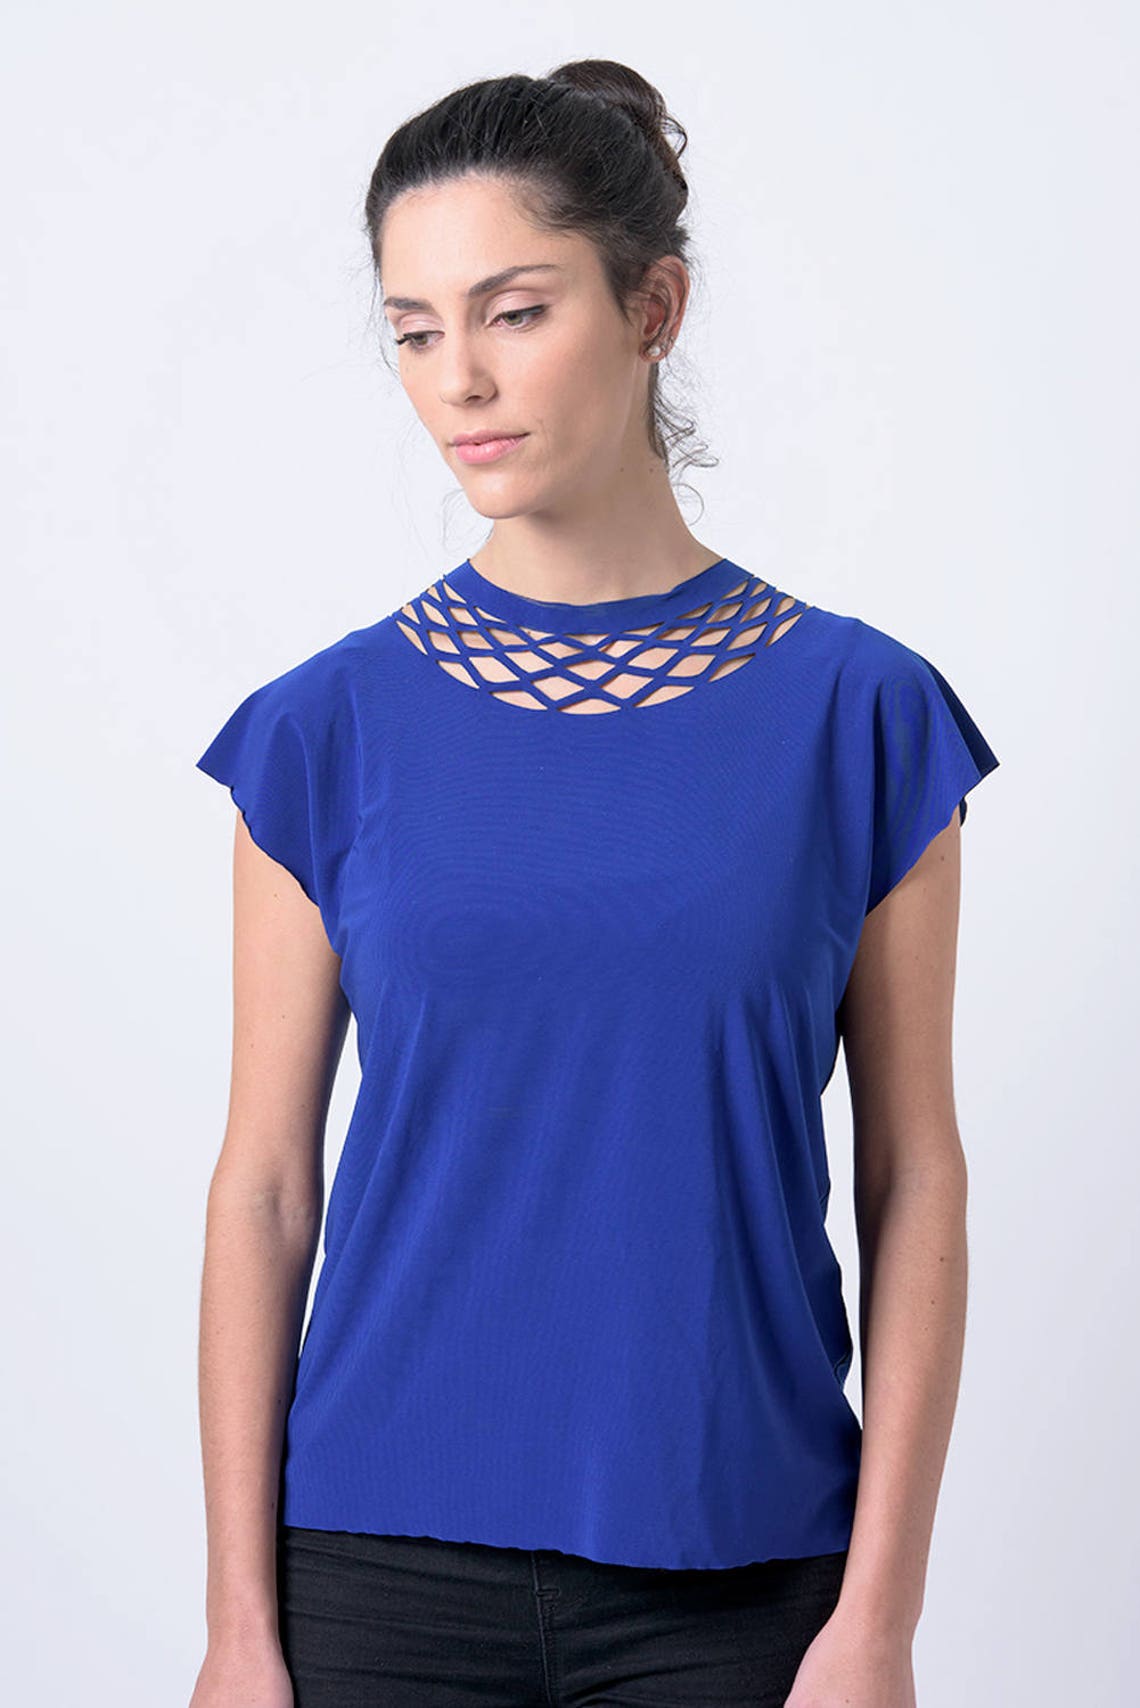 Royal Blue Shirt Shirt Dress Blue Top Women Blouse Blue - Etsy